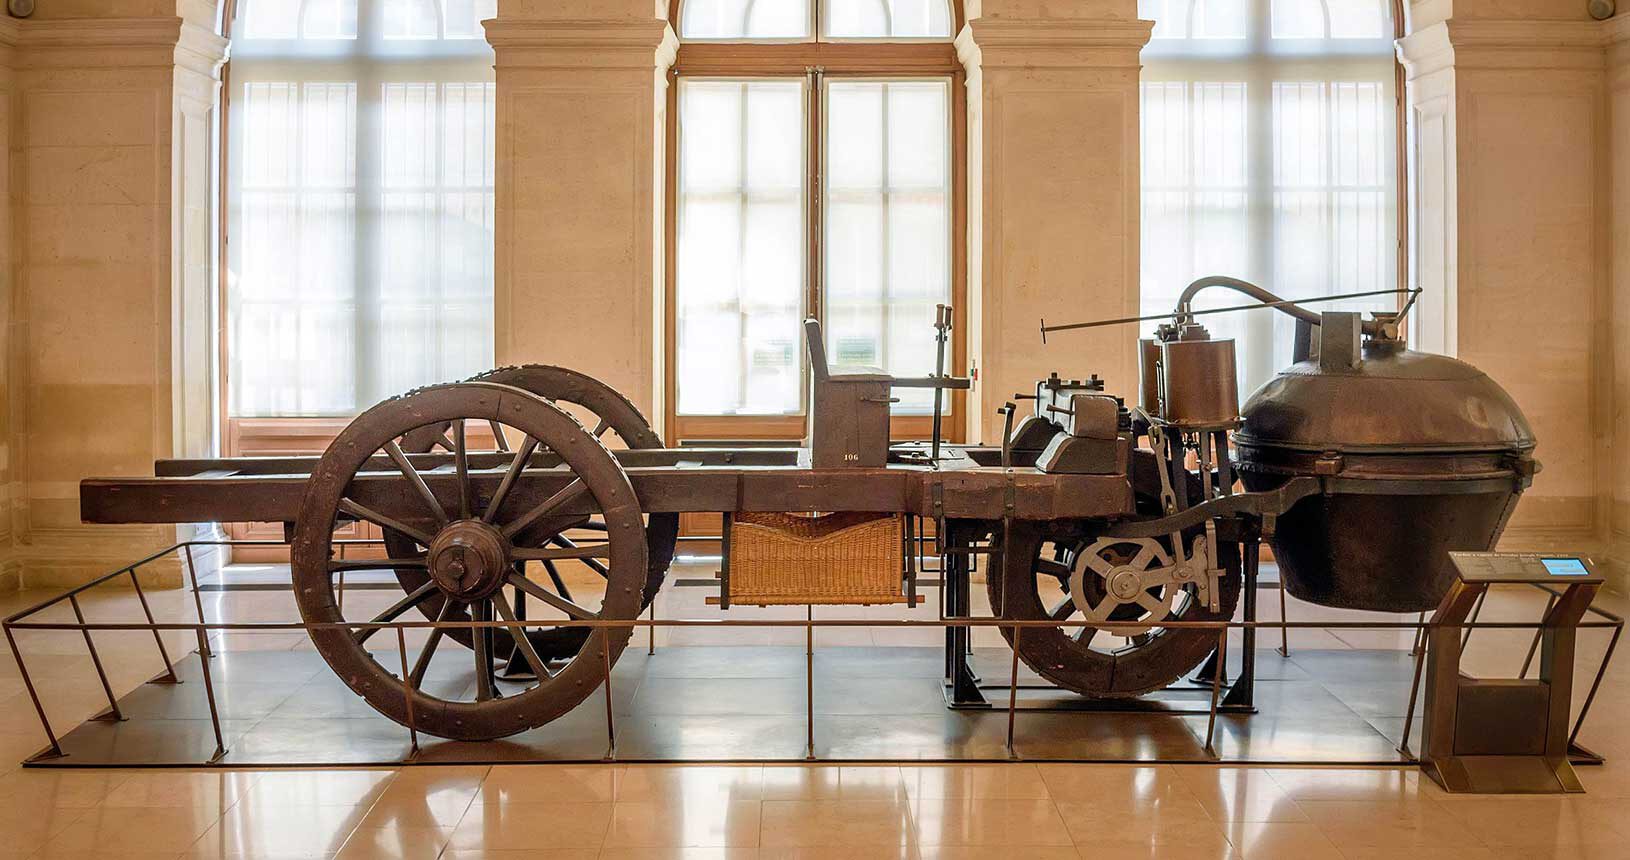 1770: Dampfwagen "Fardier" - erstes Motorfahrzeug der Weltgeschichte von Nicholas Cugnot (1725-1804), Musée des Arts et Métiers, Paris (Public Domain)